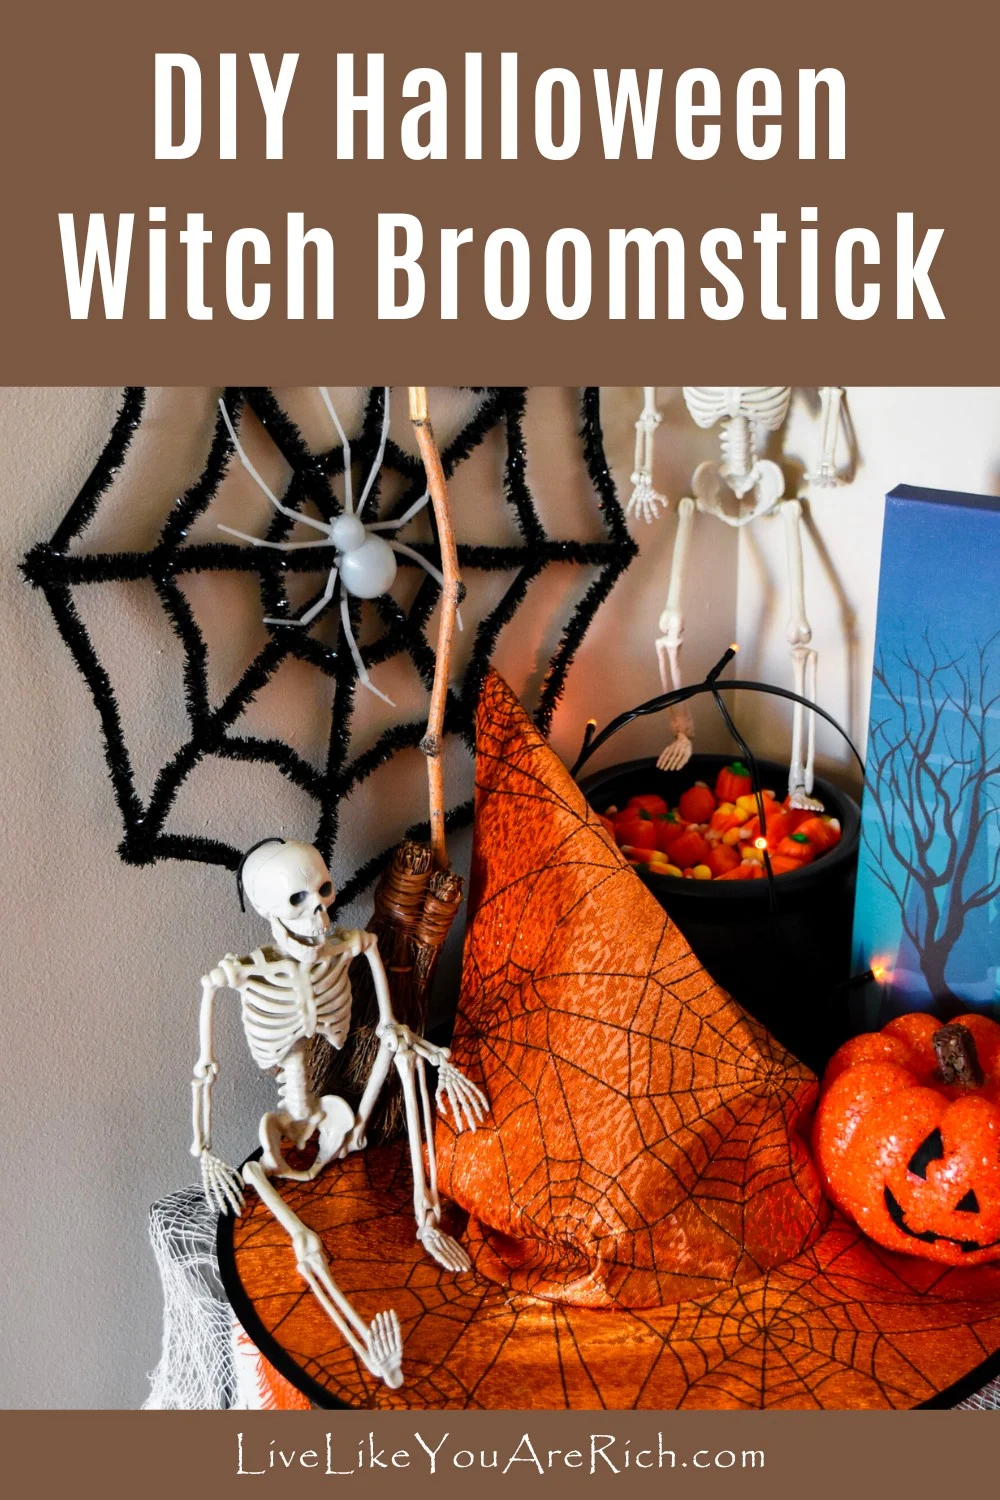 DIY Halloween Witch Broomstick